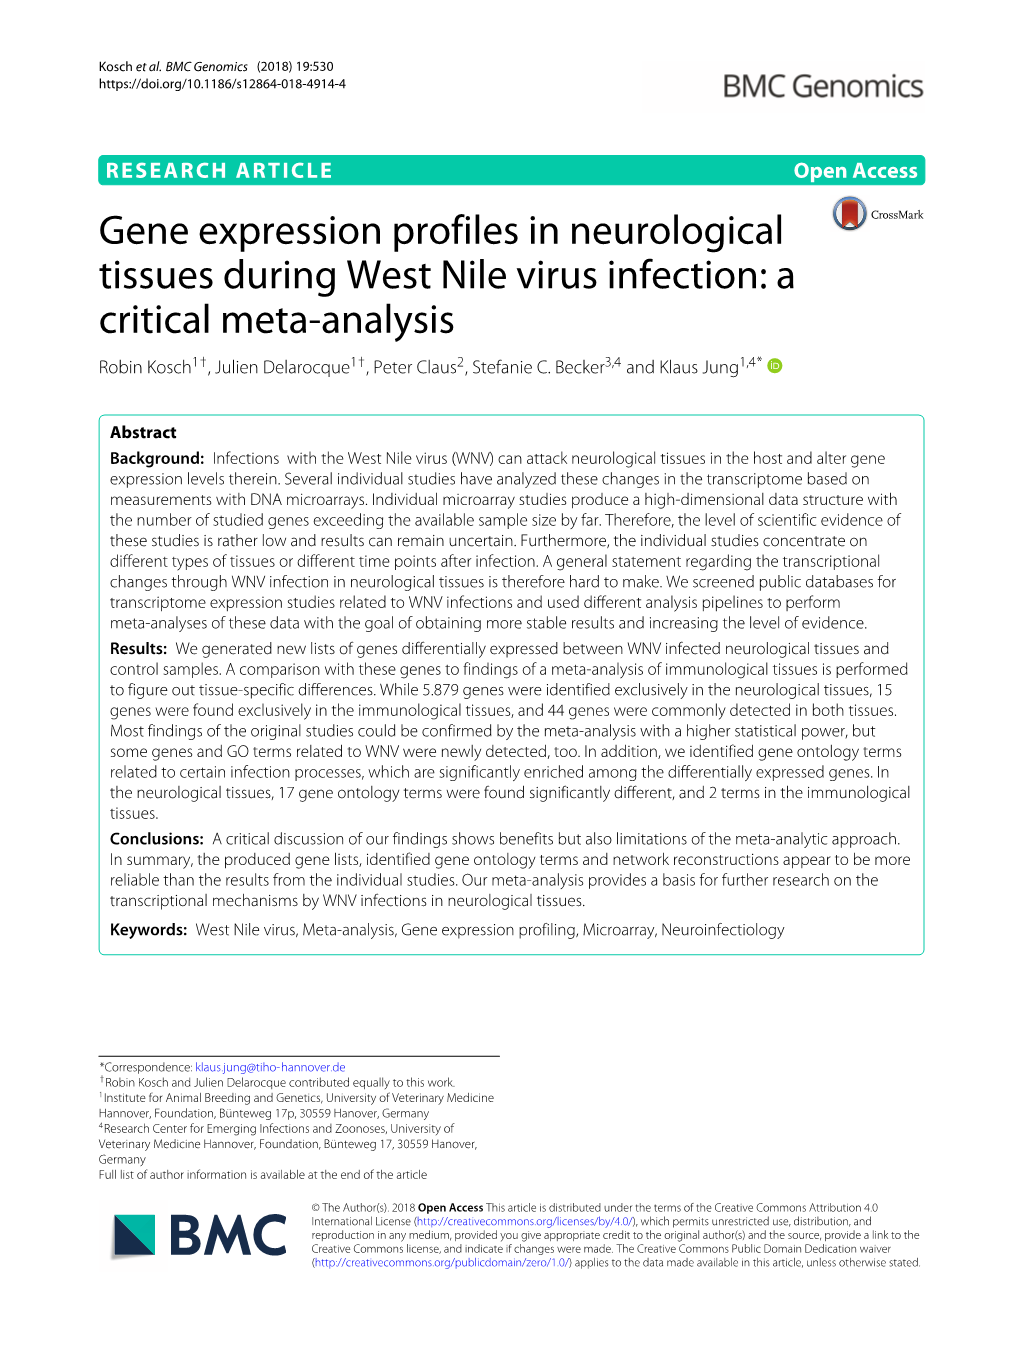 Gene Expression Profiles in Neurological